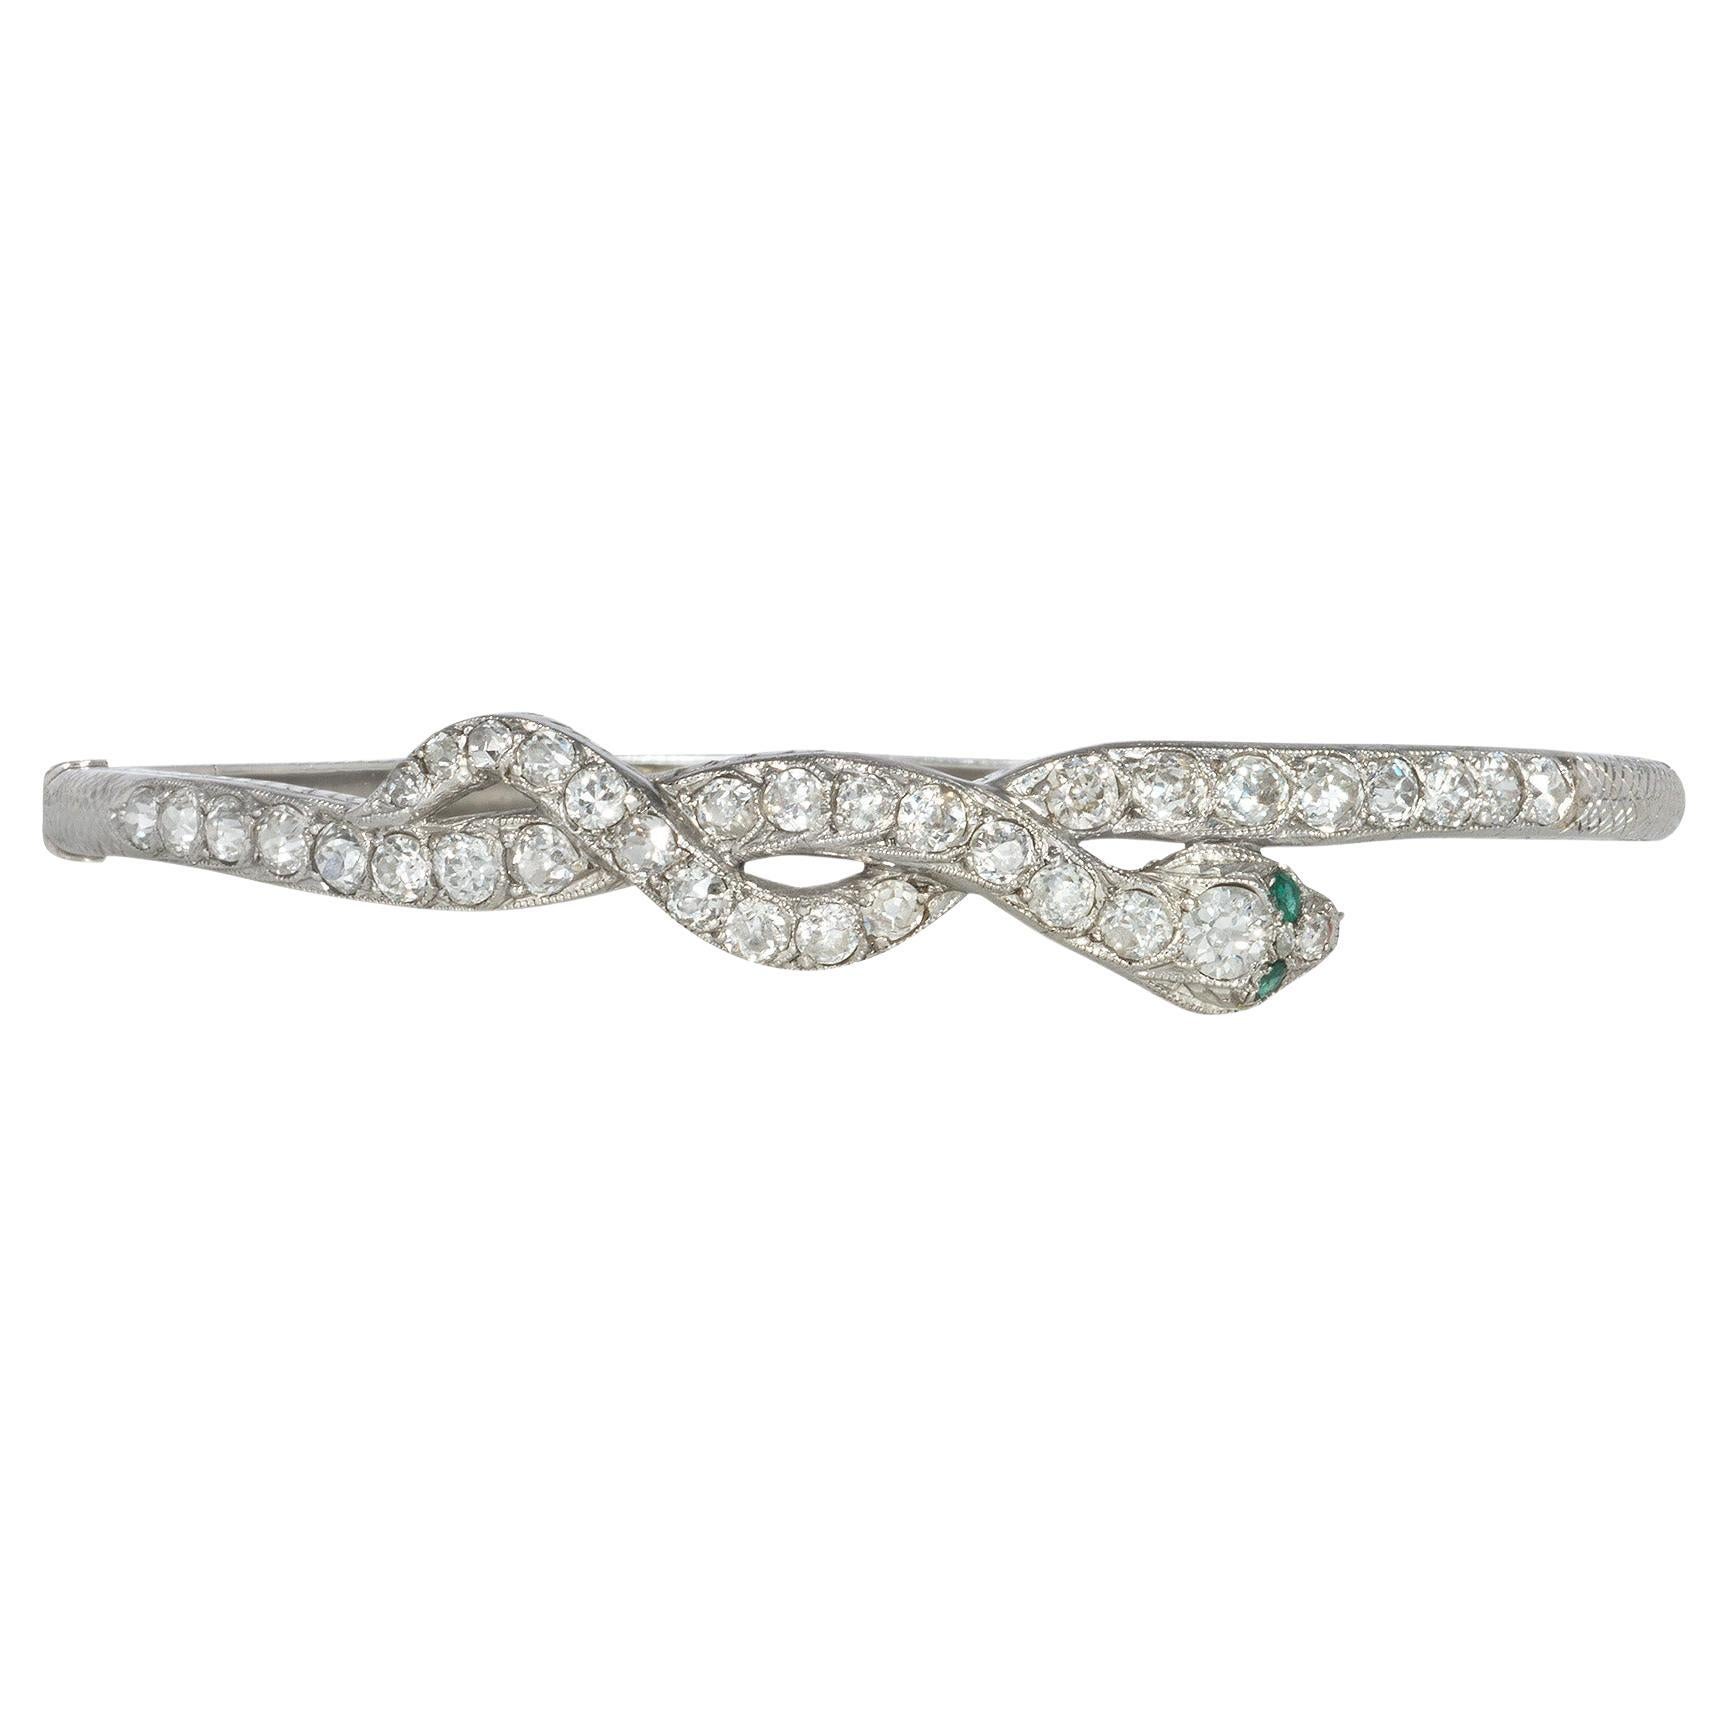 Art Deco Diamond and Platinum Entwined Snake Bracelet with Emerald Eyes